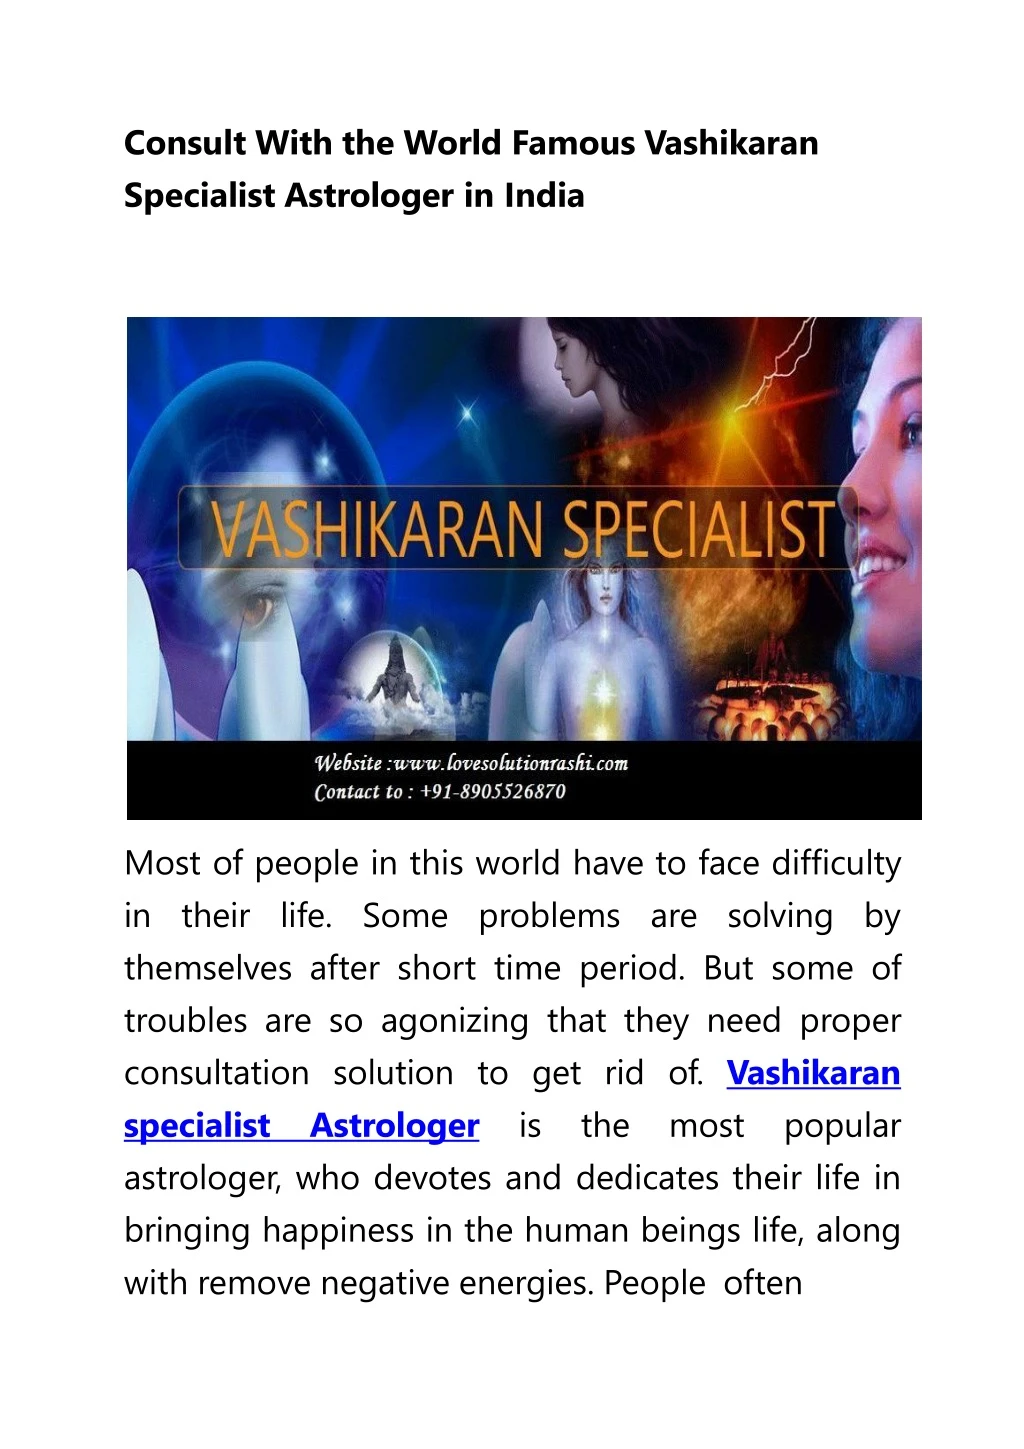 consult with the world famous vashikaran